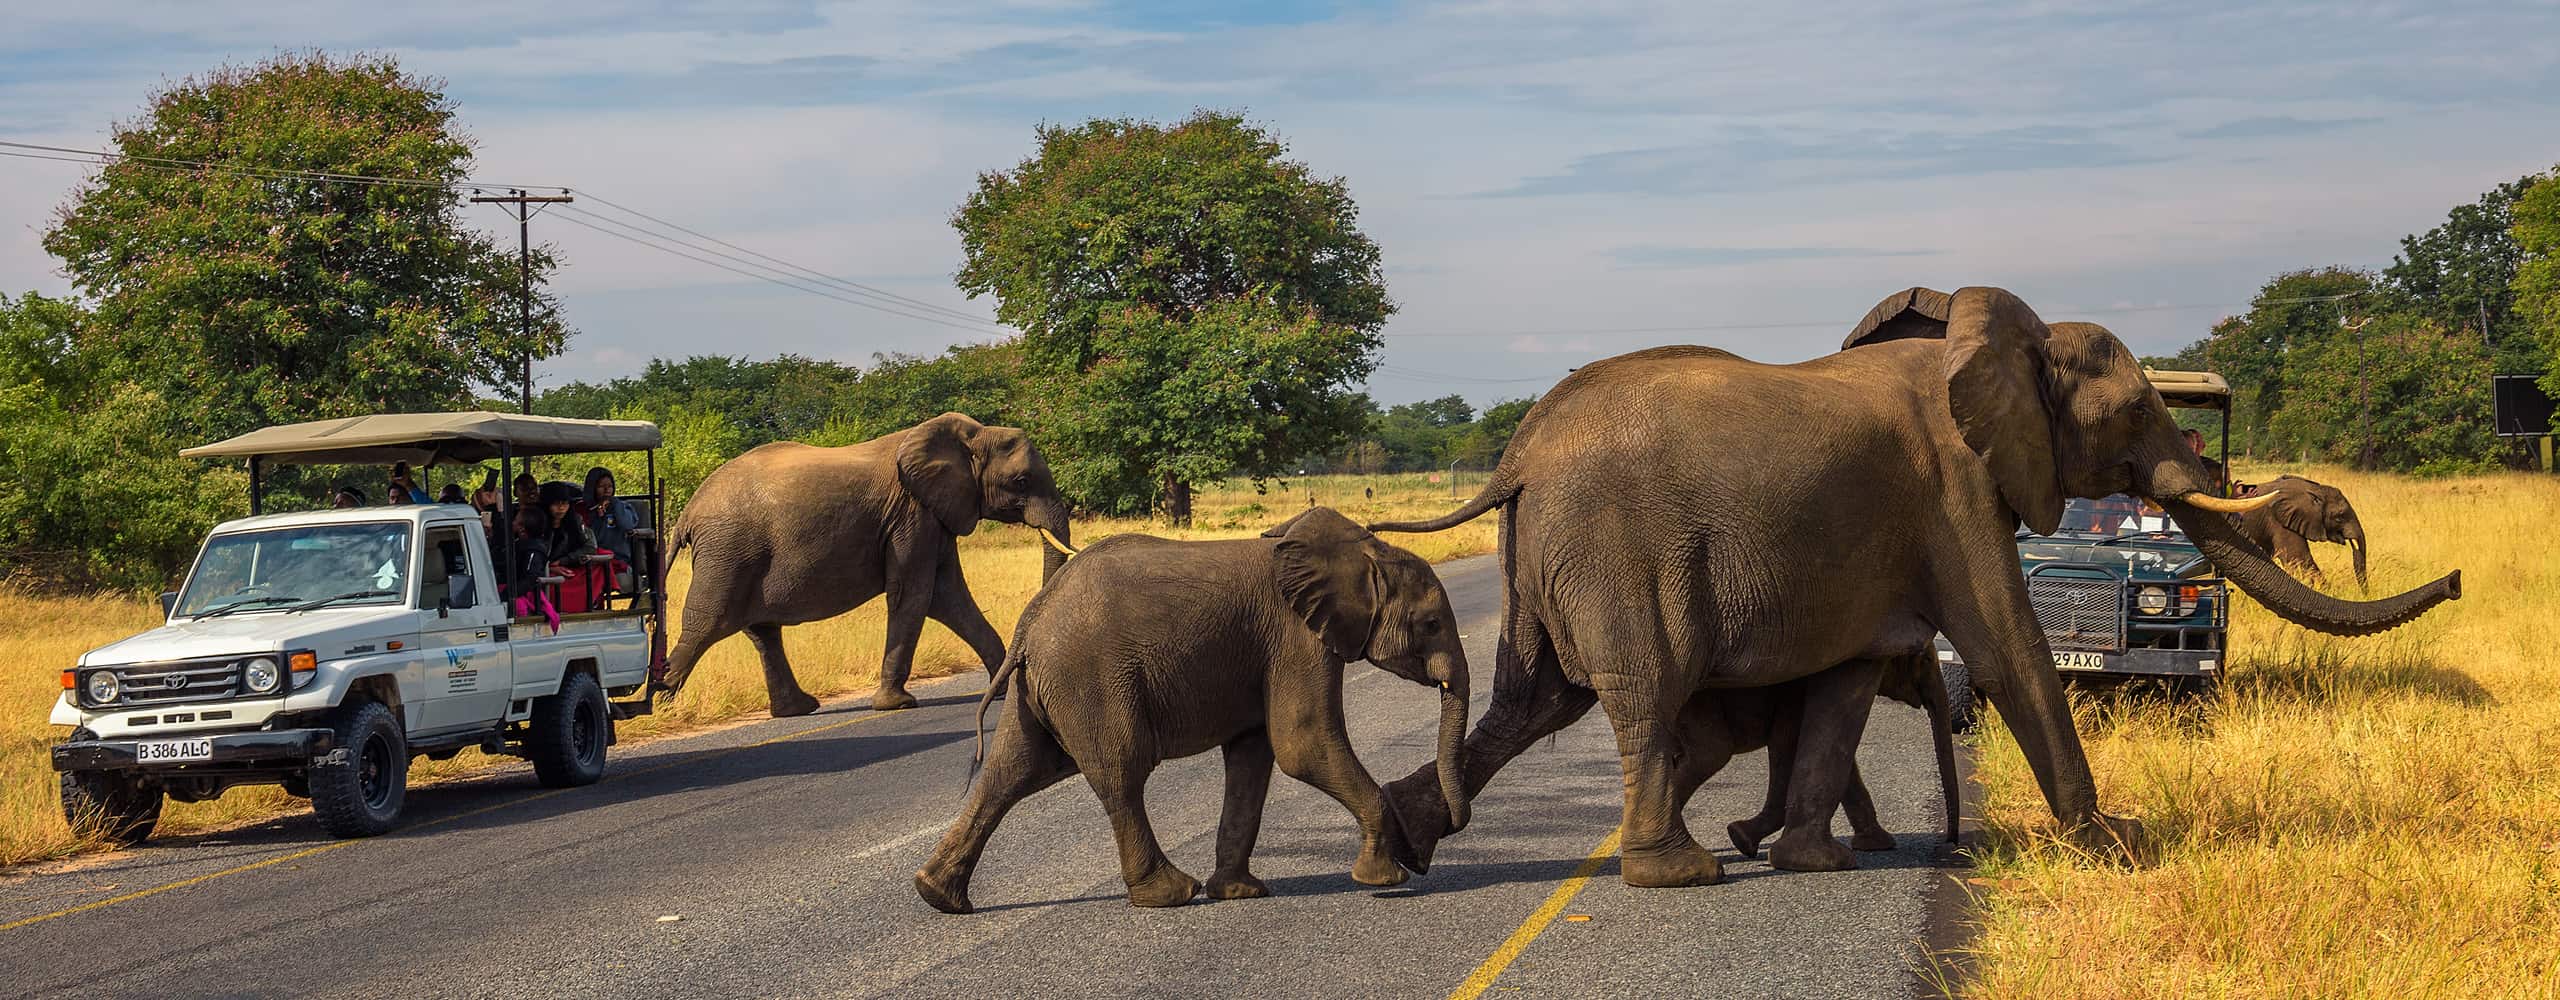 Elephants In Chobe National Park, Botswana